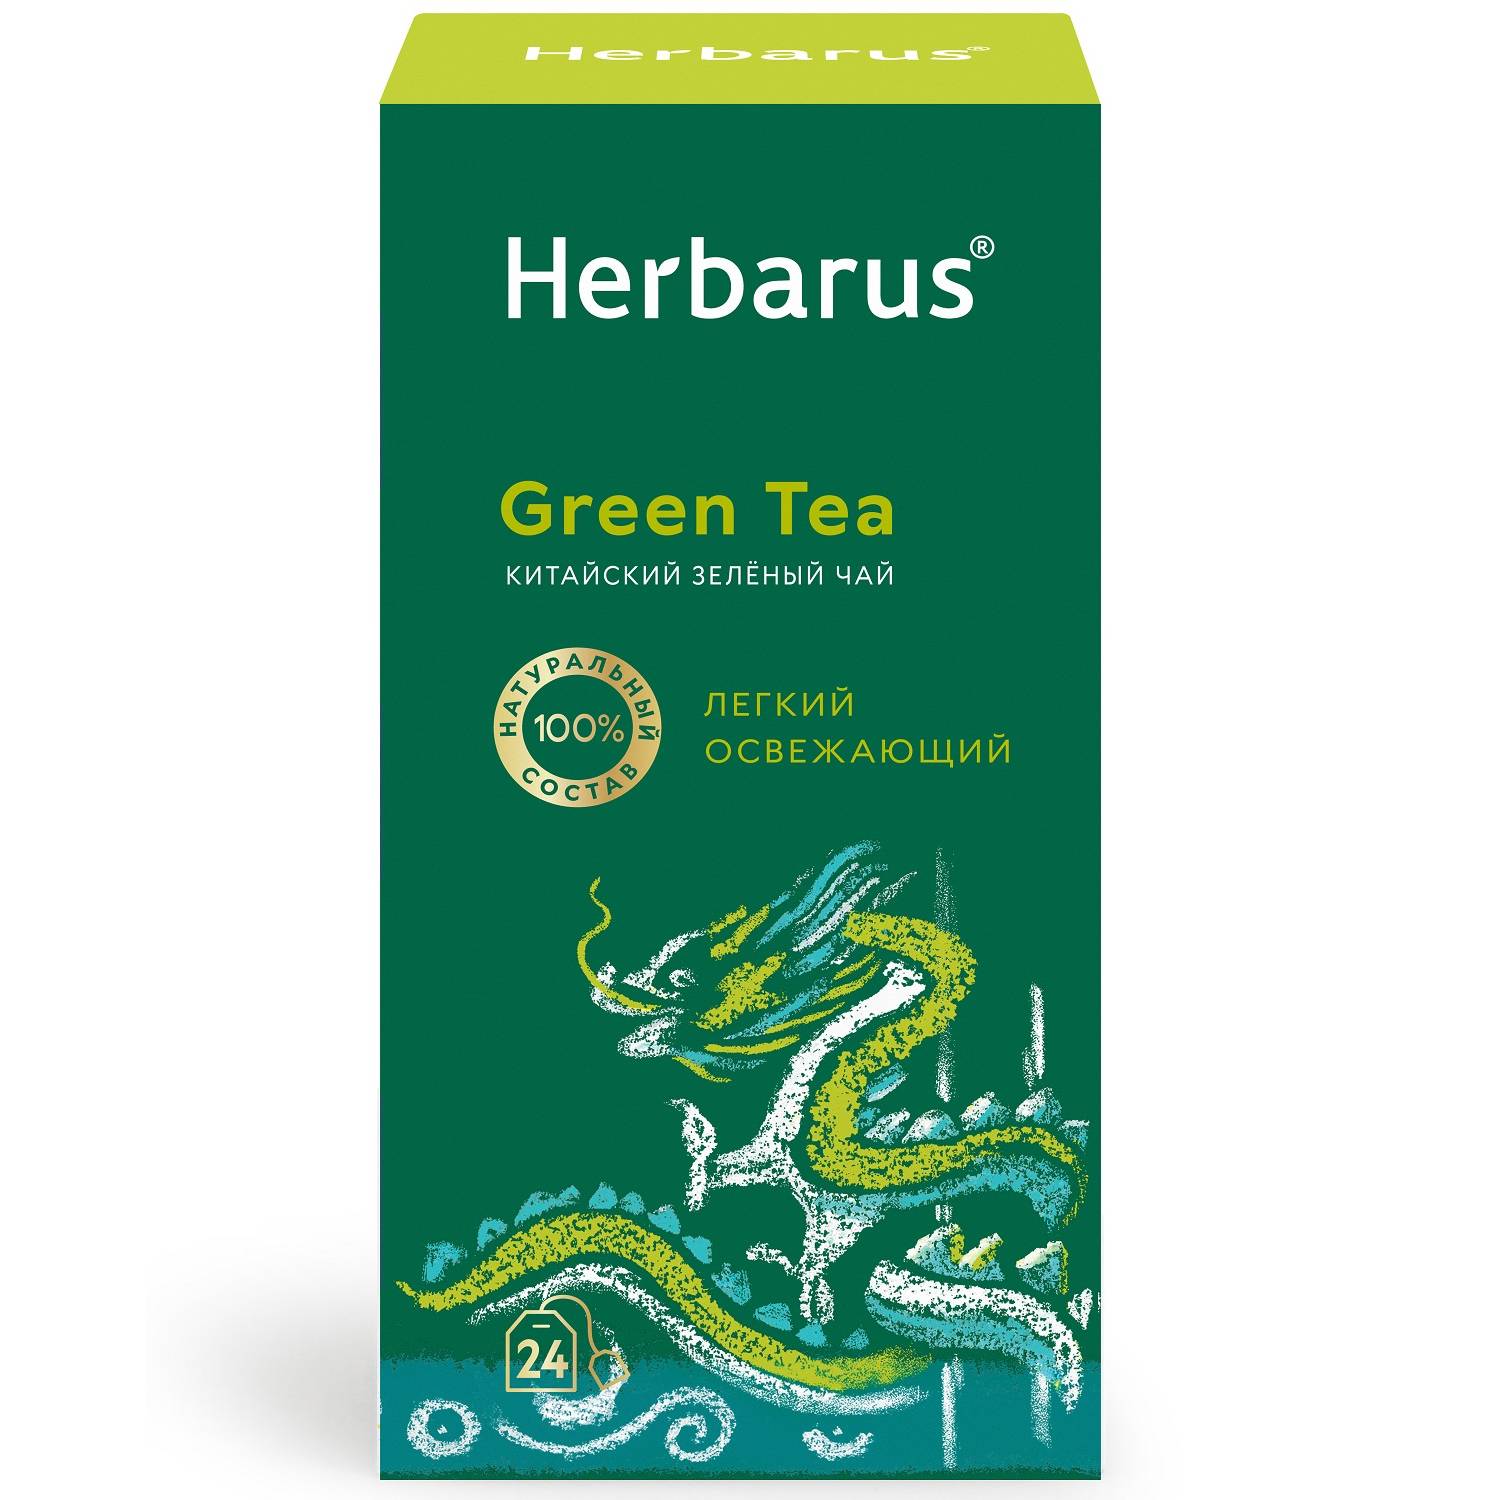 Herbarus Чай зеленый китайский Green Tea, 24 пакетика х 2 г (Herbarus, Классический чай)